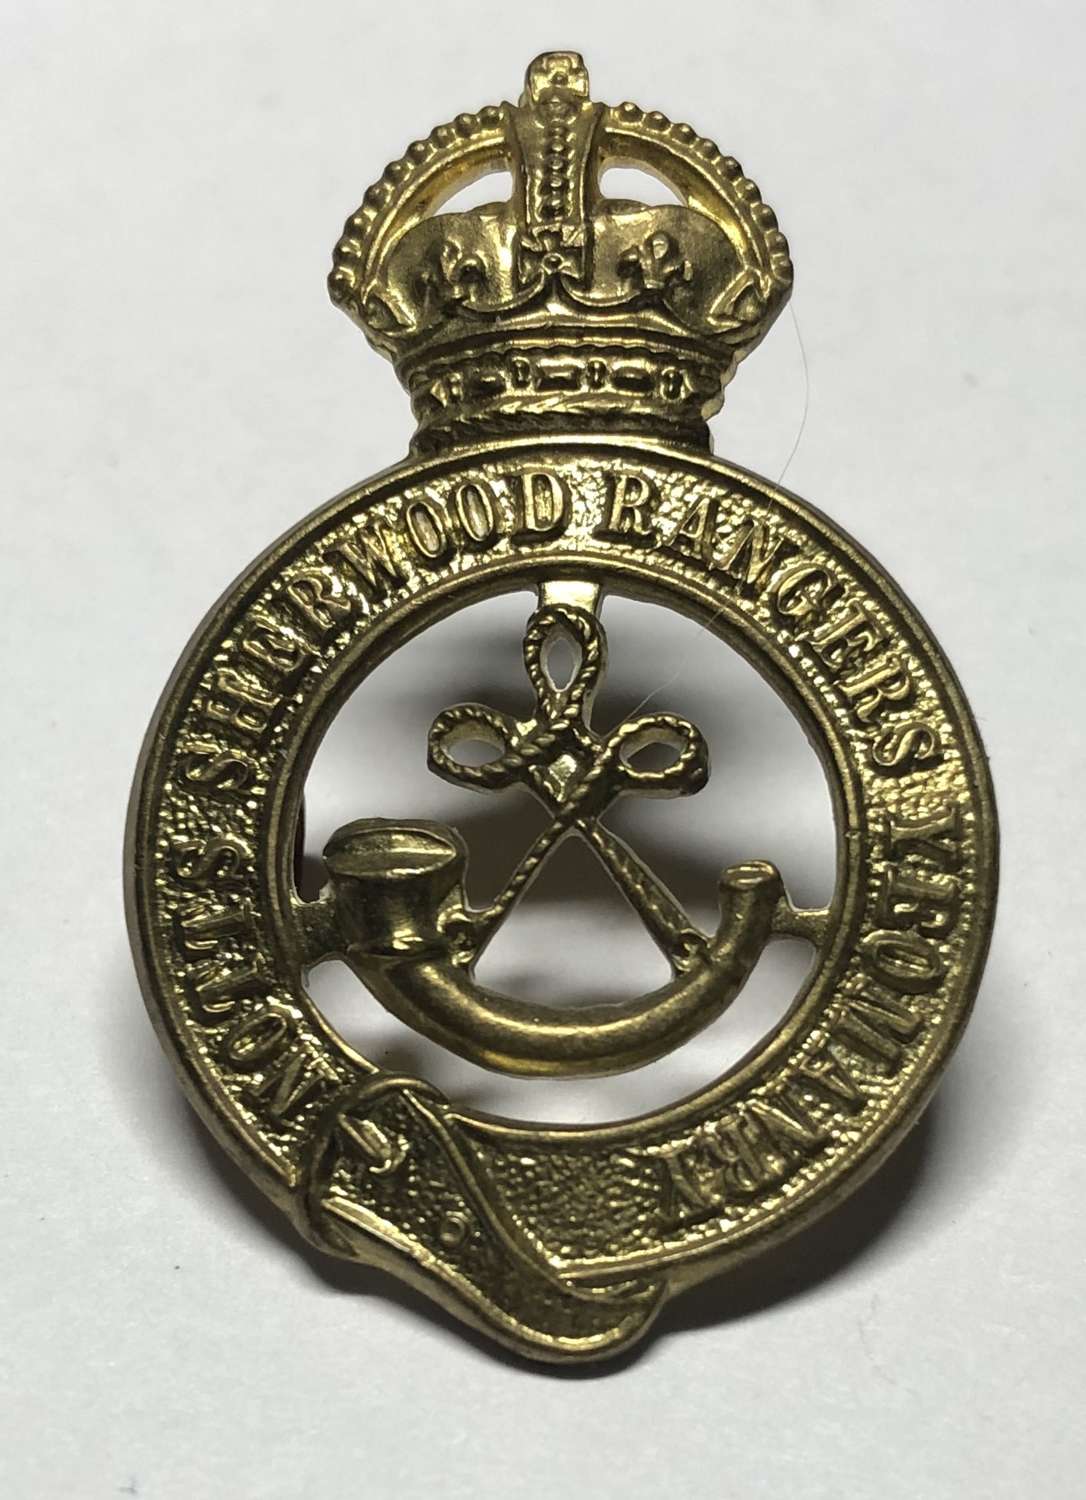 Notts. Sherwood Rangers Yeomanry cap badge circa 1936-52